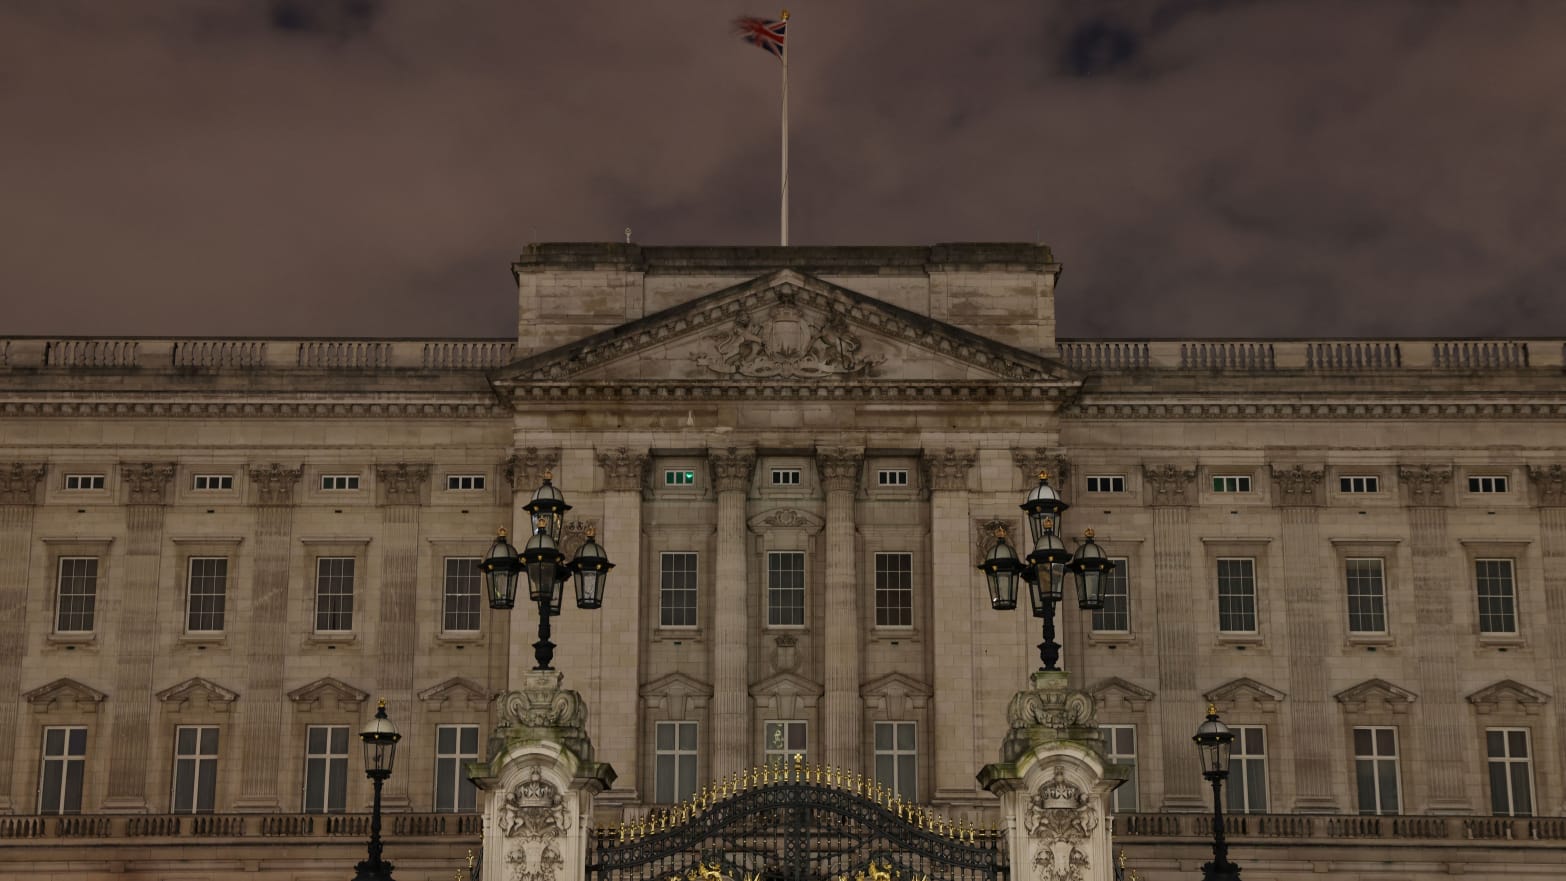 Buckingham Palace is shown